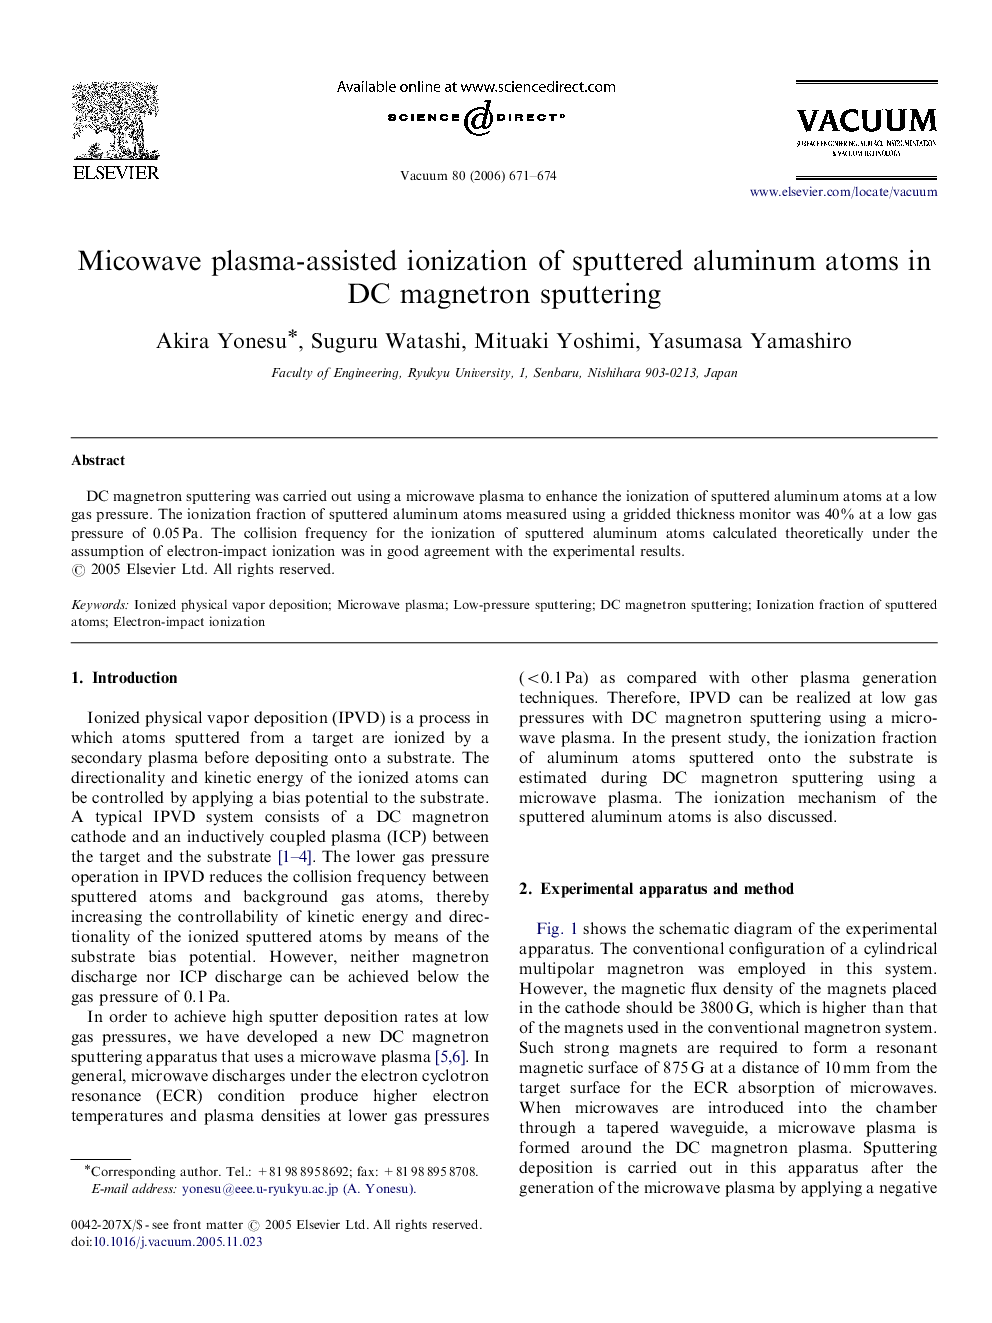 Micowave plasma-assisted ionization of sputtered aluminum atoms in DC magnetron sputtering